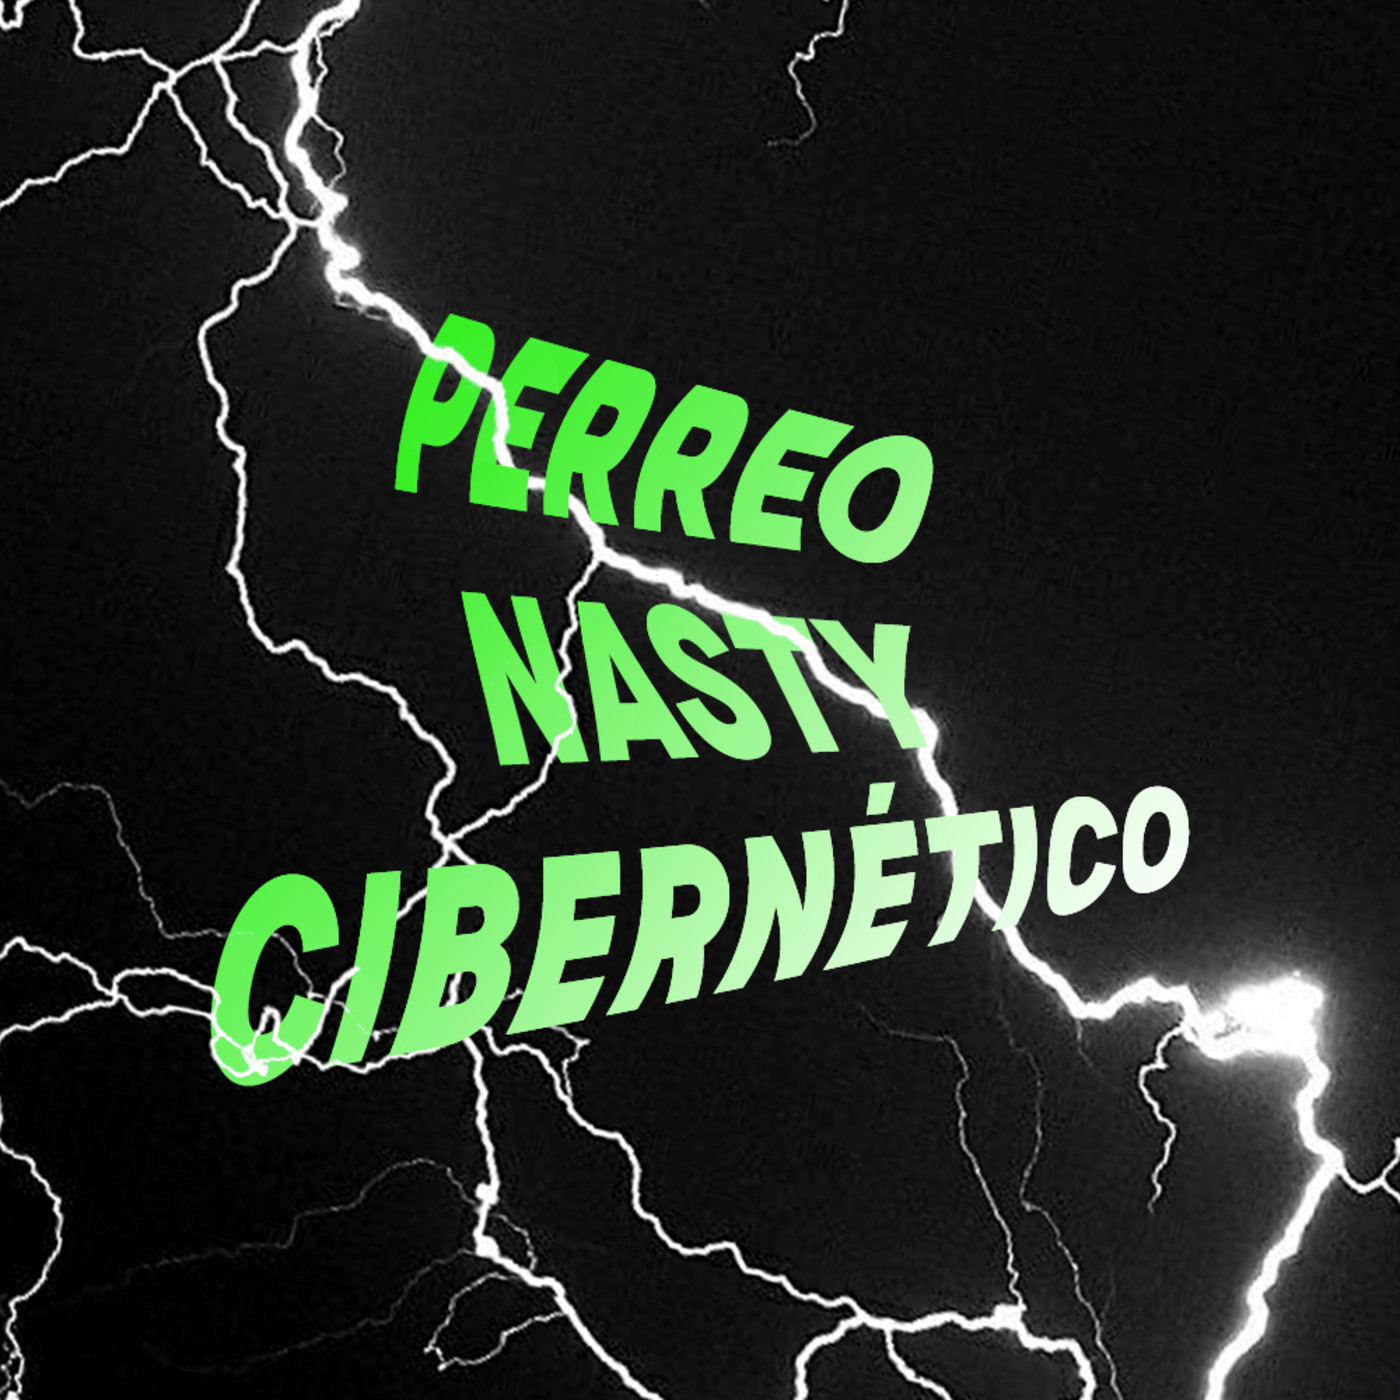 PERREO NASTY CIBERNÉTICO